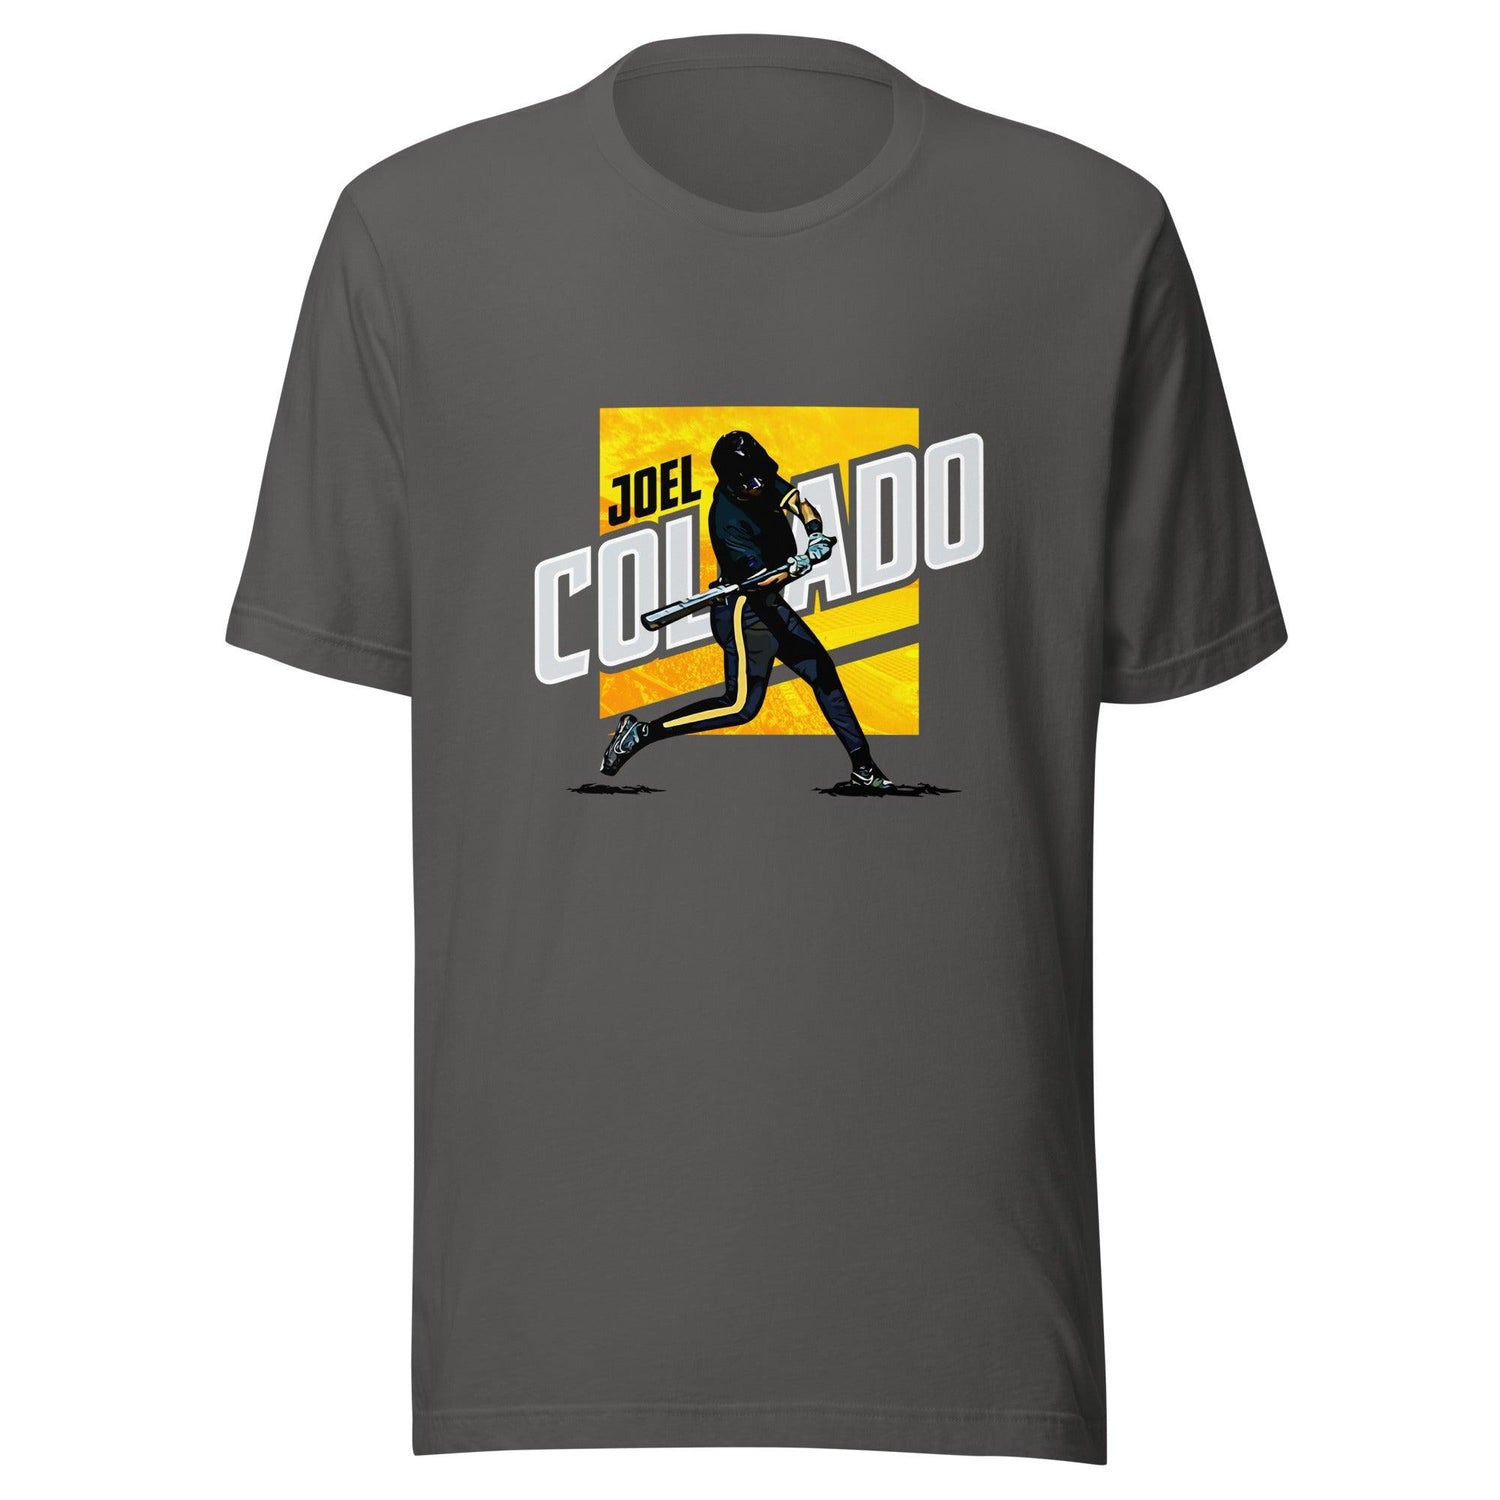 Joel Collado "Gameday" t-shirt - Fan Arch